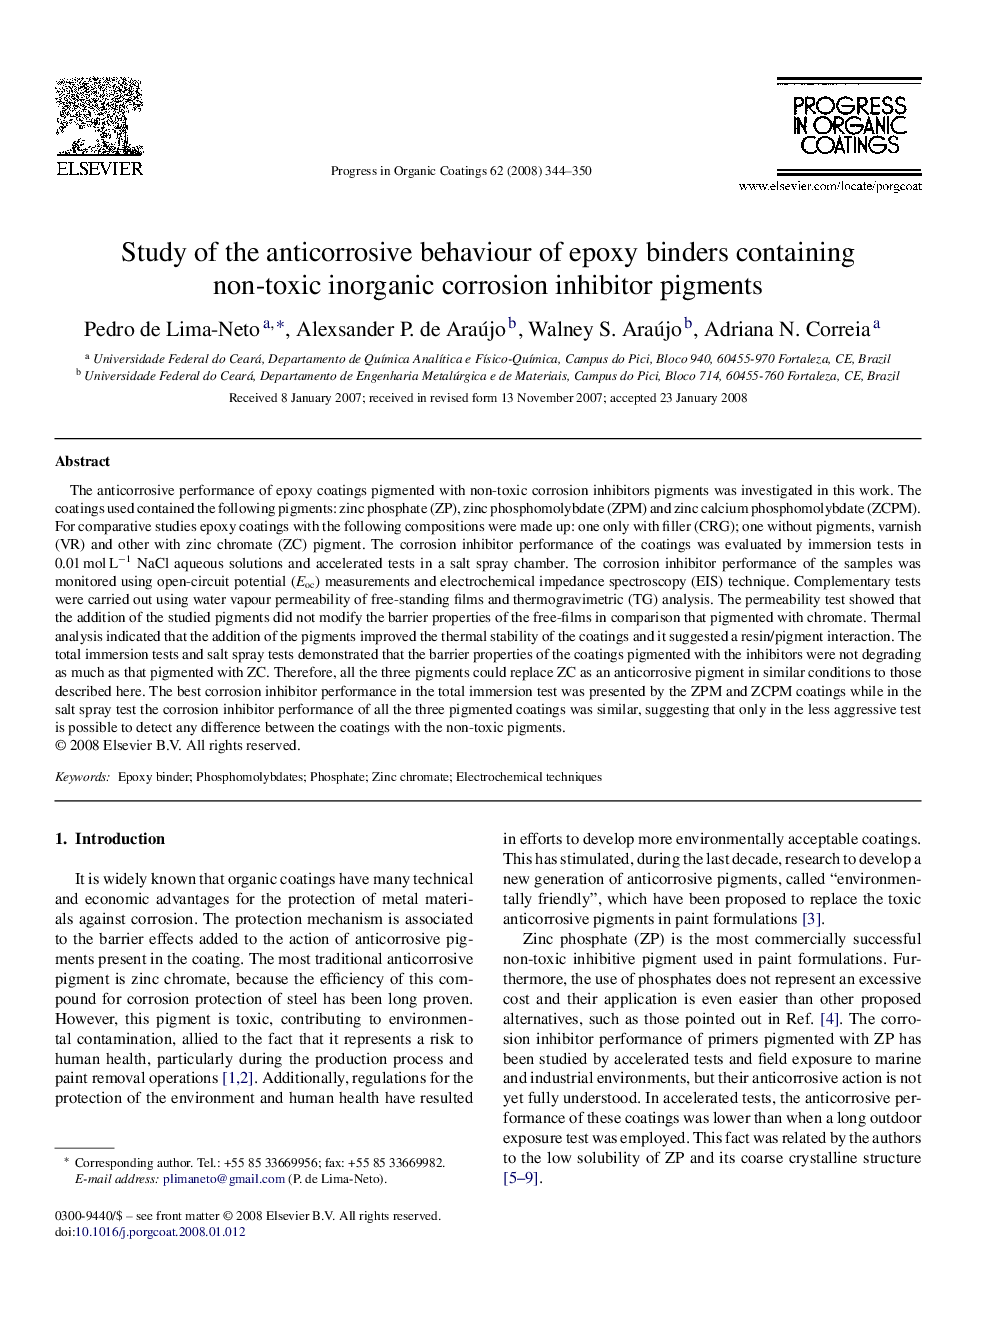 Study of the anticorrosive behaviour of epoxy binders containing non-toxic inorganic corrosion inhibitor pigments